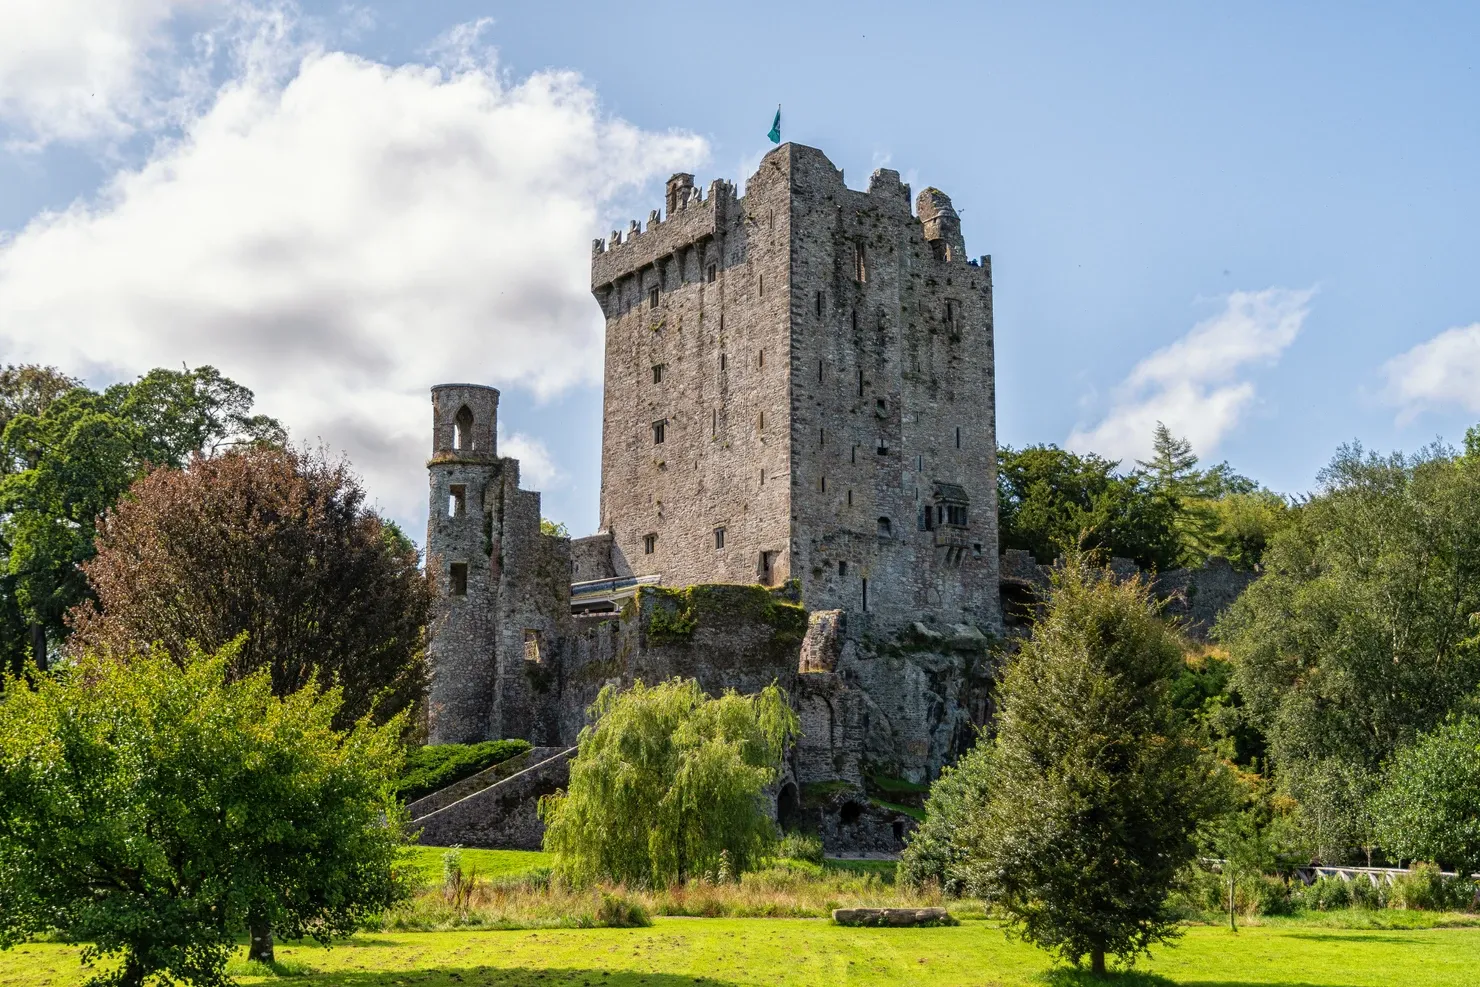 The Blarney Castle fortress in Blarney, Ireland